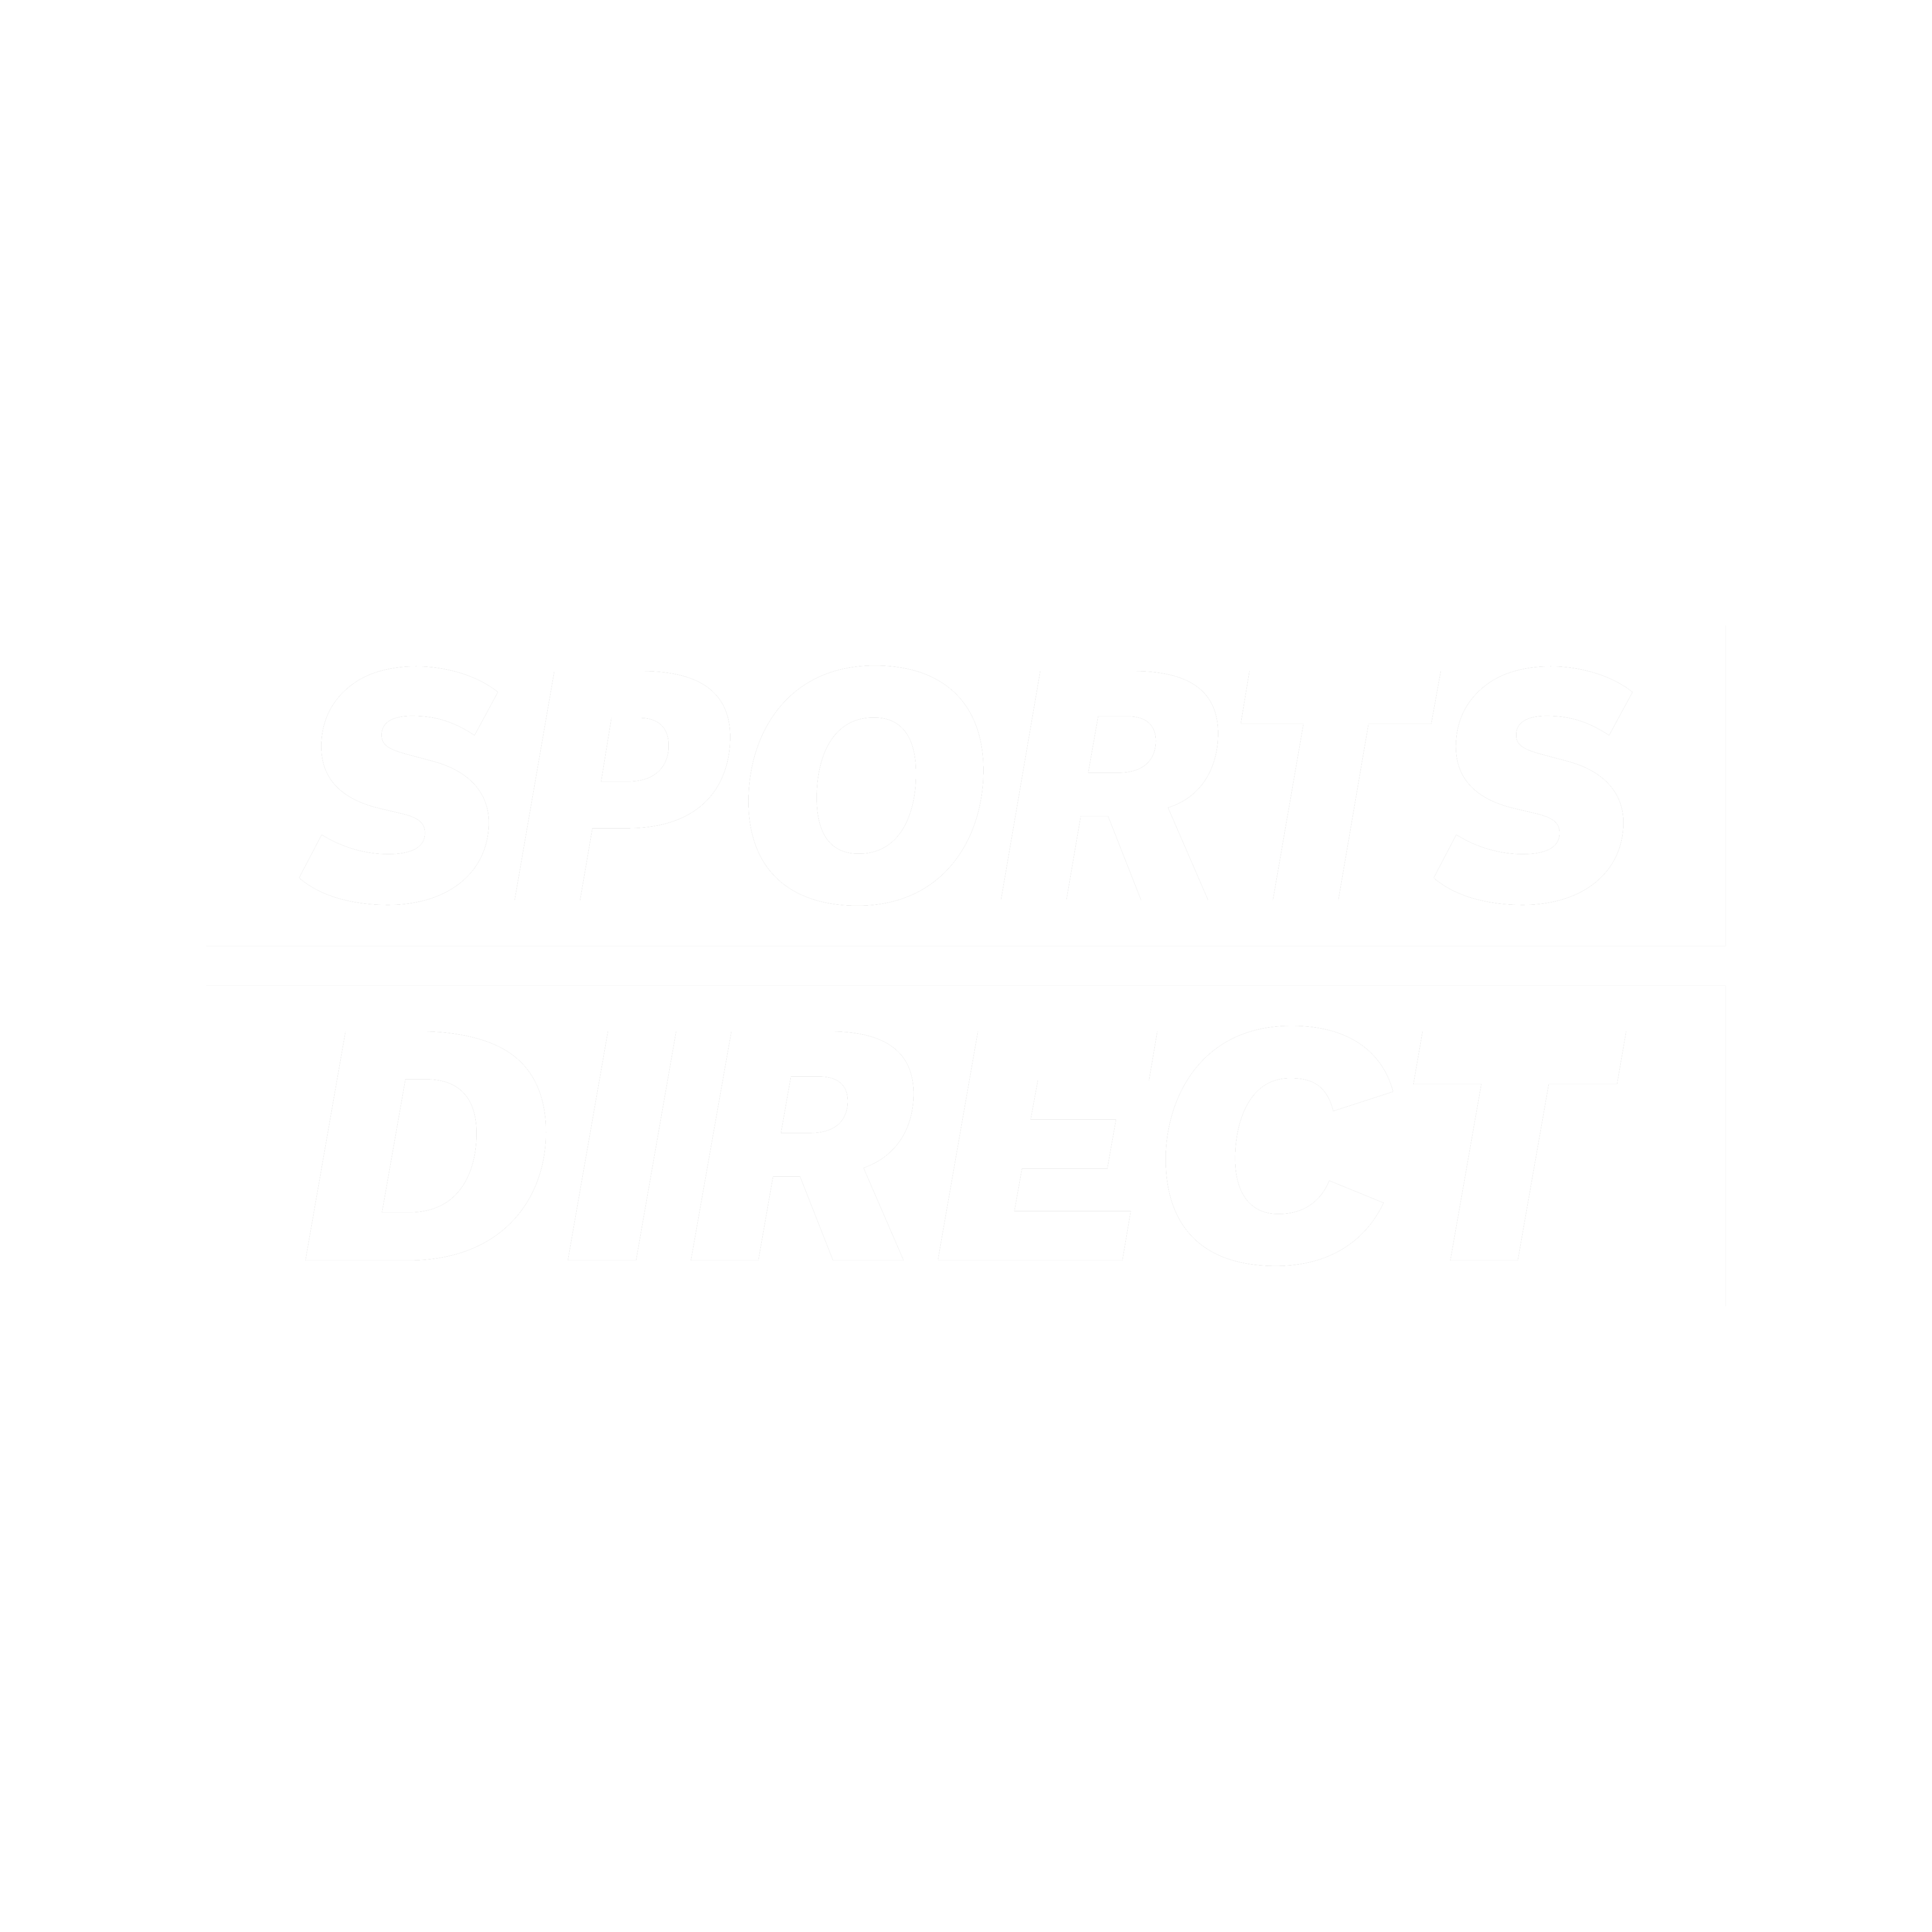 Sports Direct Ireland